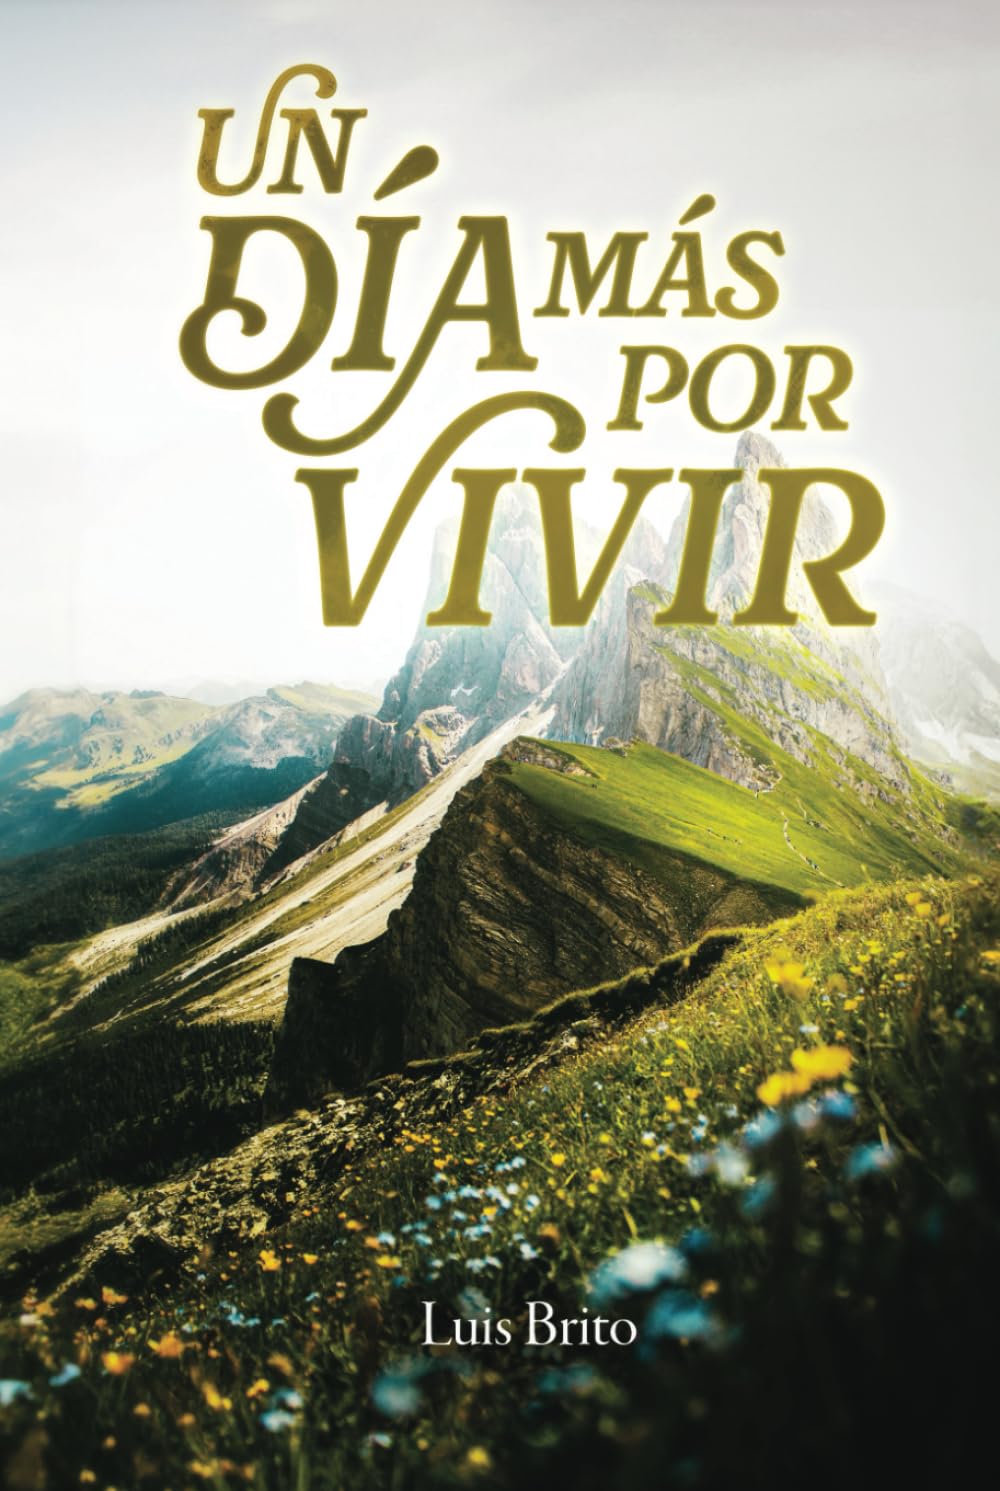 Un día mas por vivir (Spanish Edition)